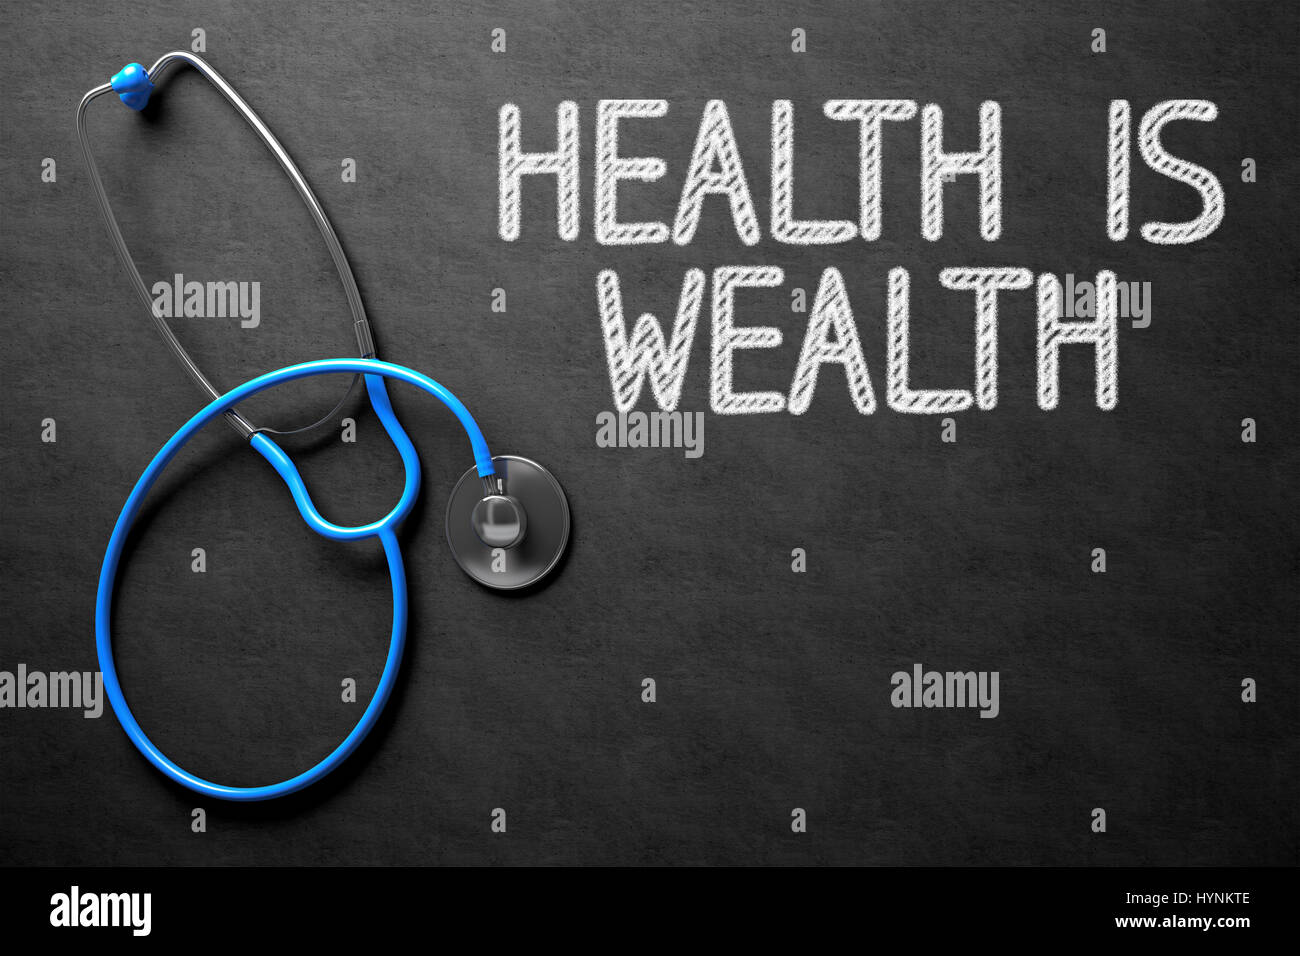 Health Is Wealth - Text on Chalkboard. 3D Illustration. Stock Photo